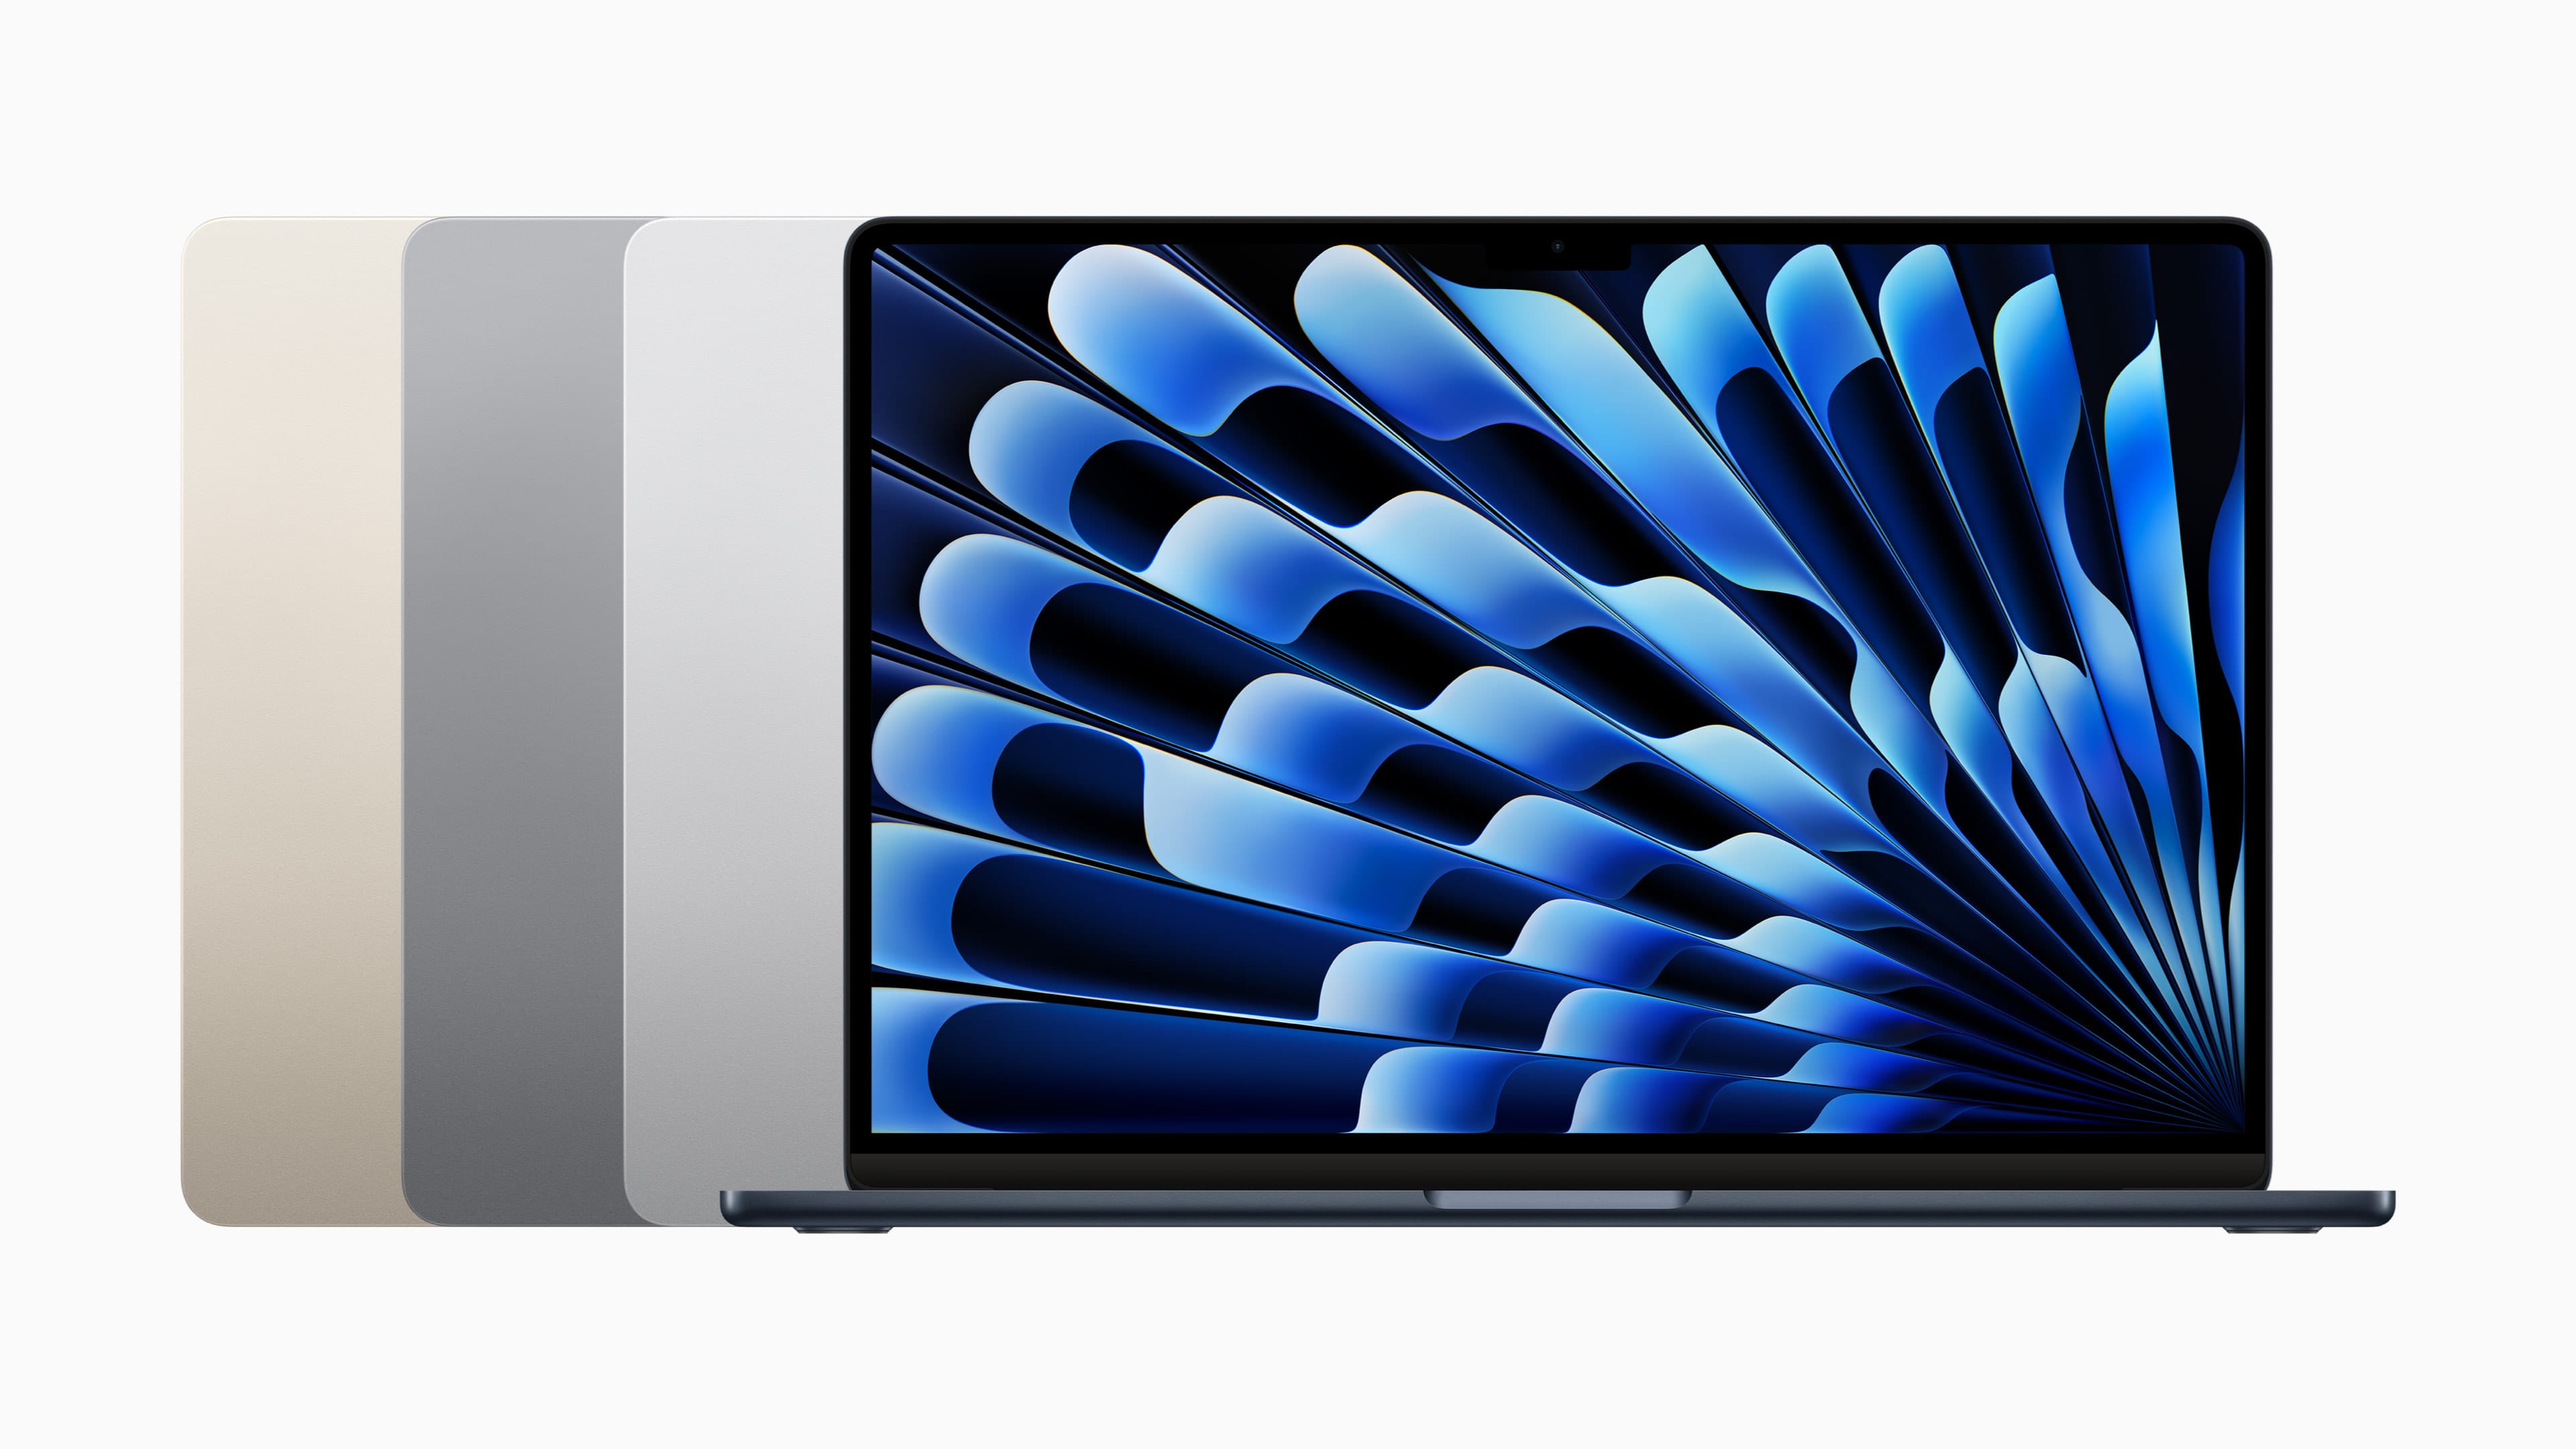 Amazonで「15インチMacBook Air」の予約販売がスタート